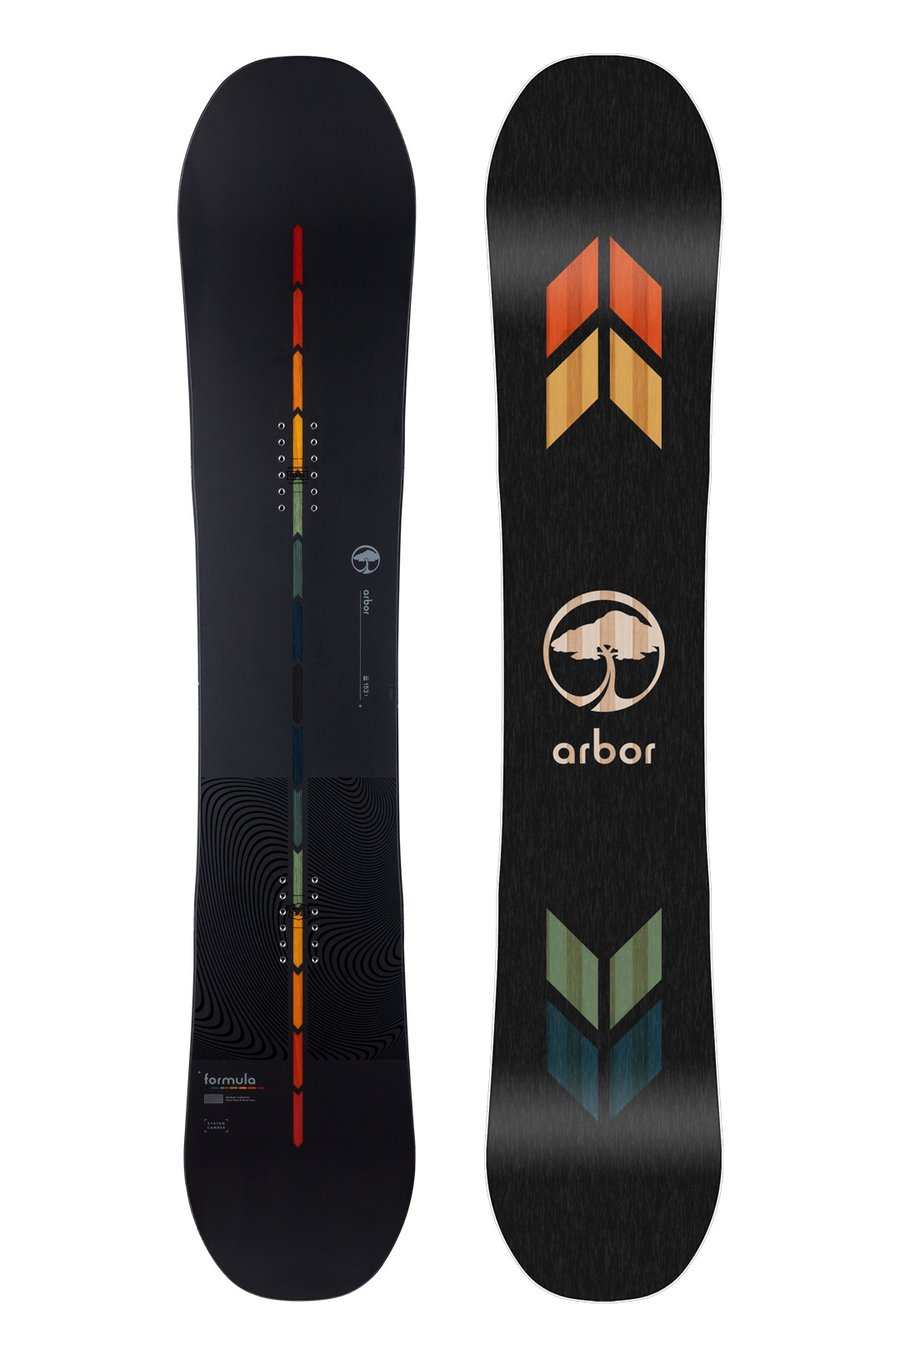 Arbor - Formula Camber Snowboard 156